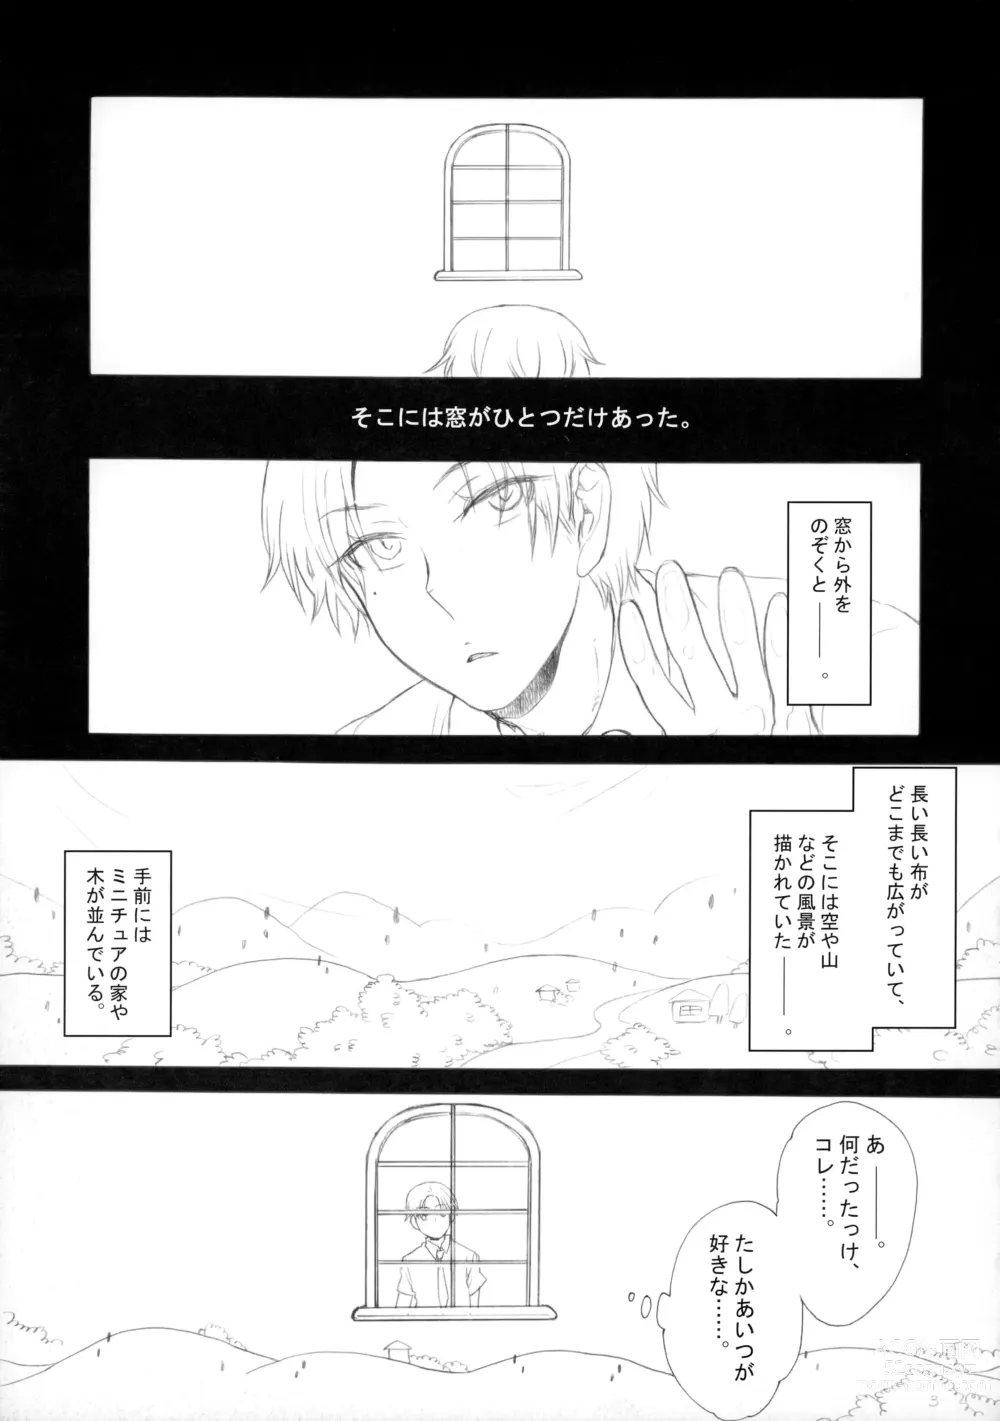 Page 8 of doujinshi 幻視画少年